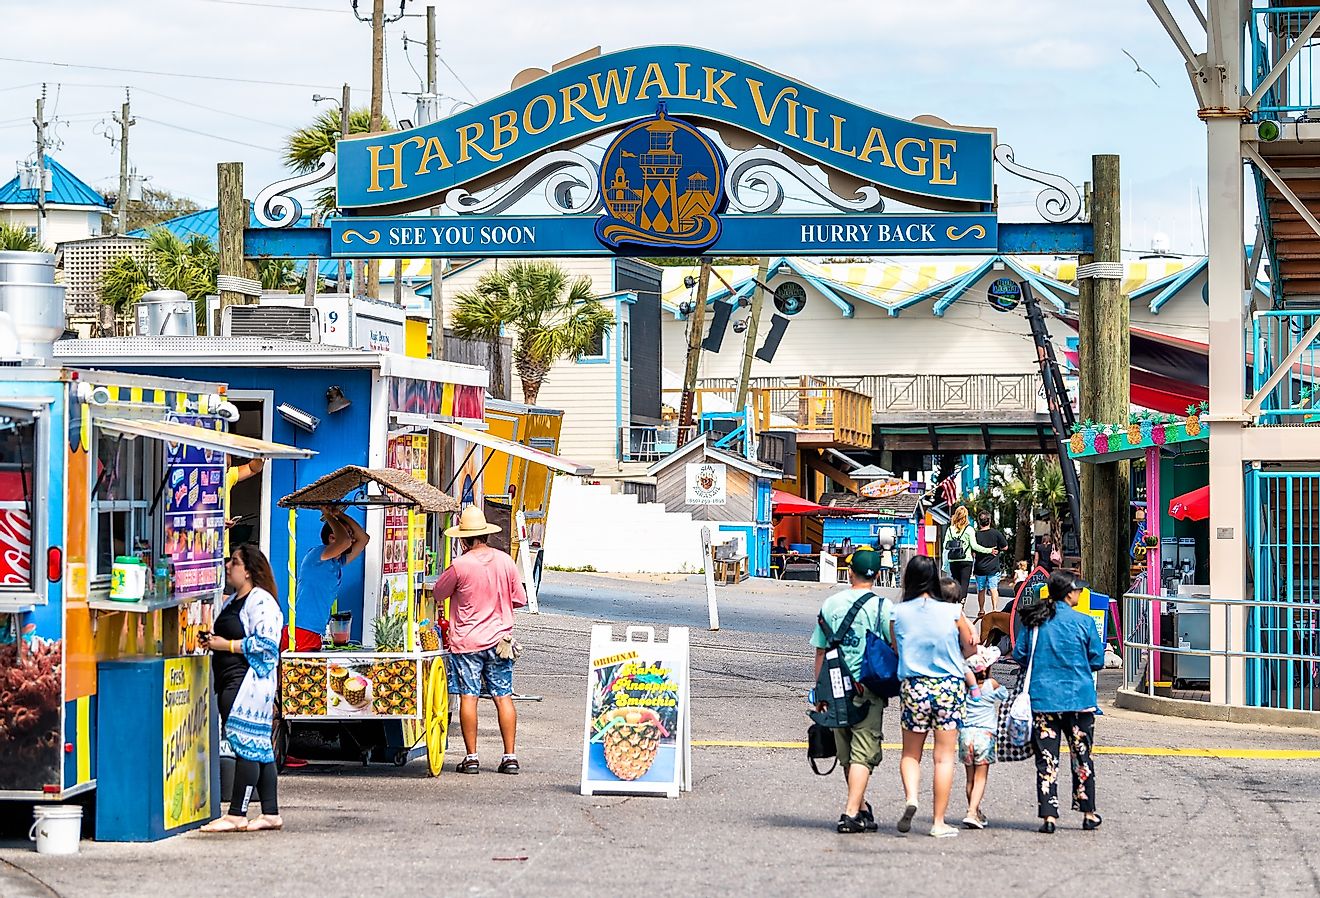 Sign for Harborwalk Village in Destin, Florida with people walking and shopping, buying food in cafe, street vendor restaurants. Image credit Andriy Blokhin via Shutterstock